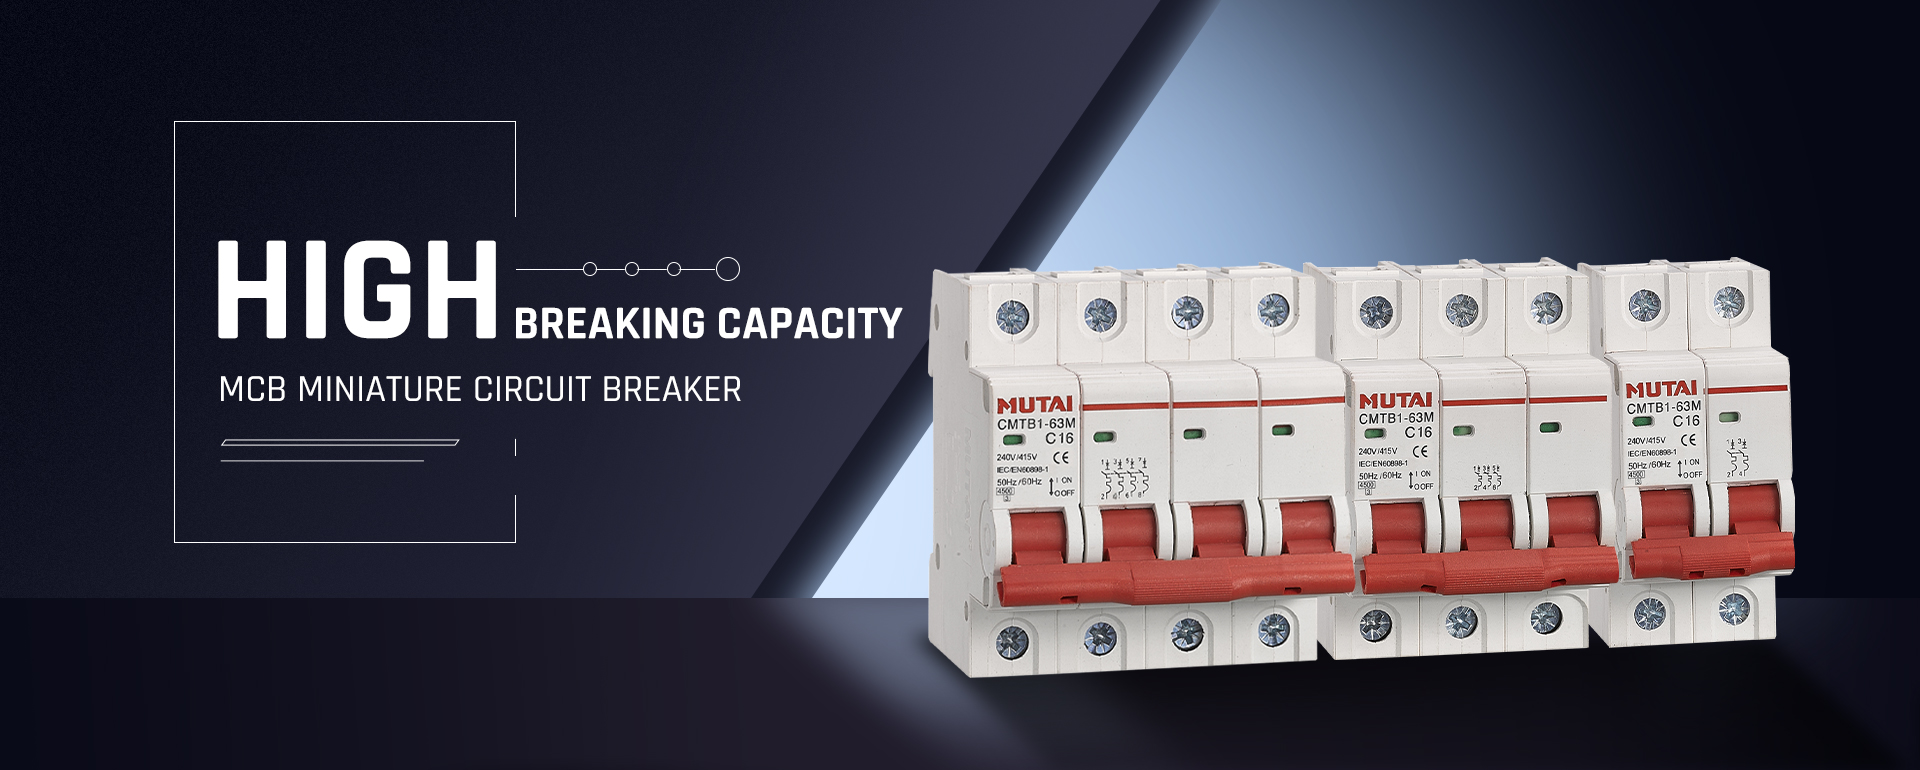 miniature-circuit-breaker-mcb